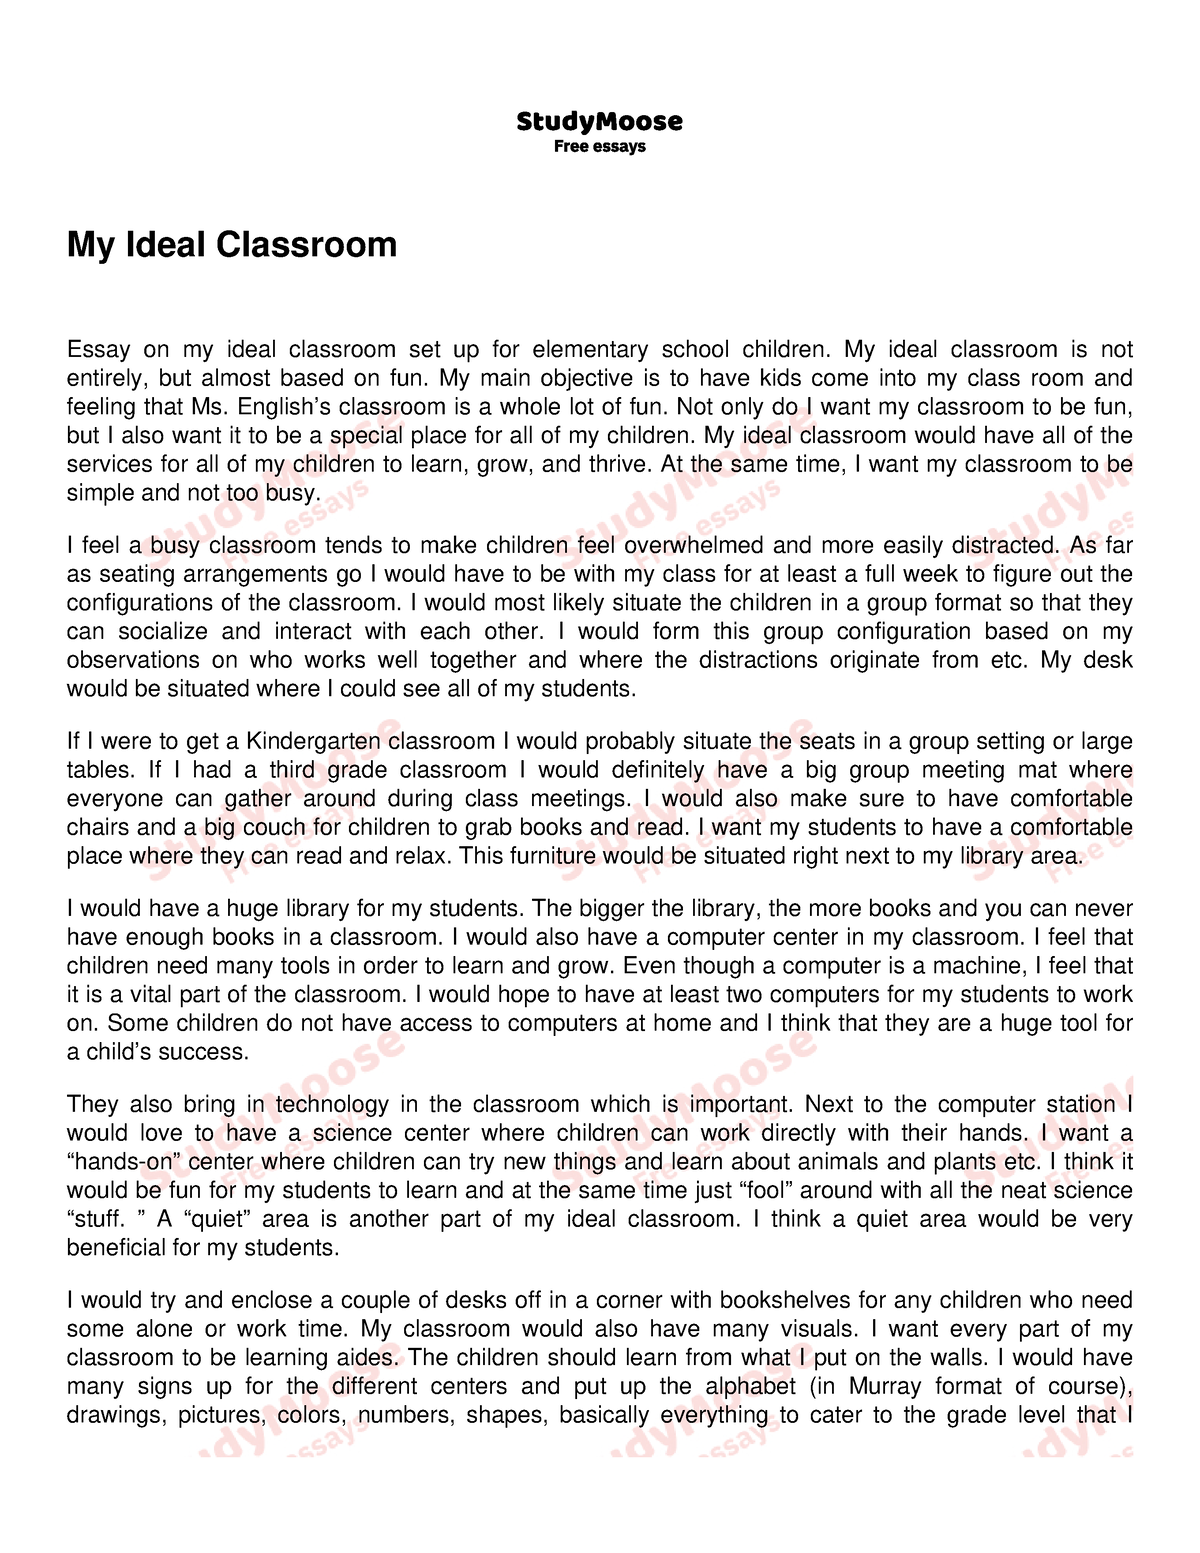 the perfect classroom essay